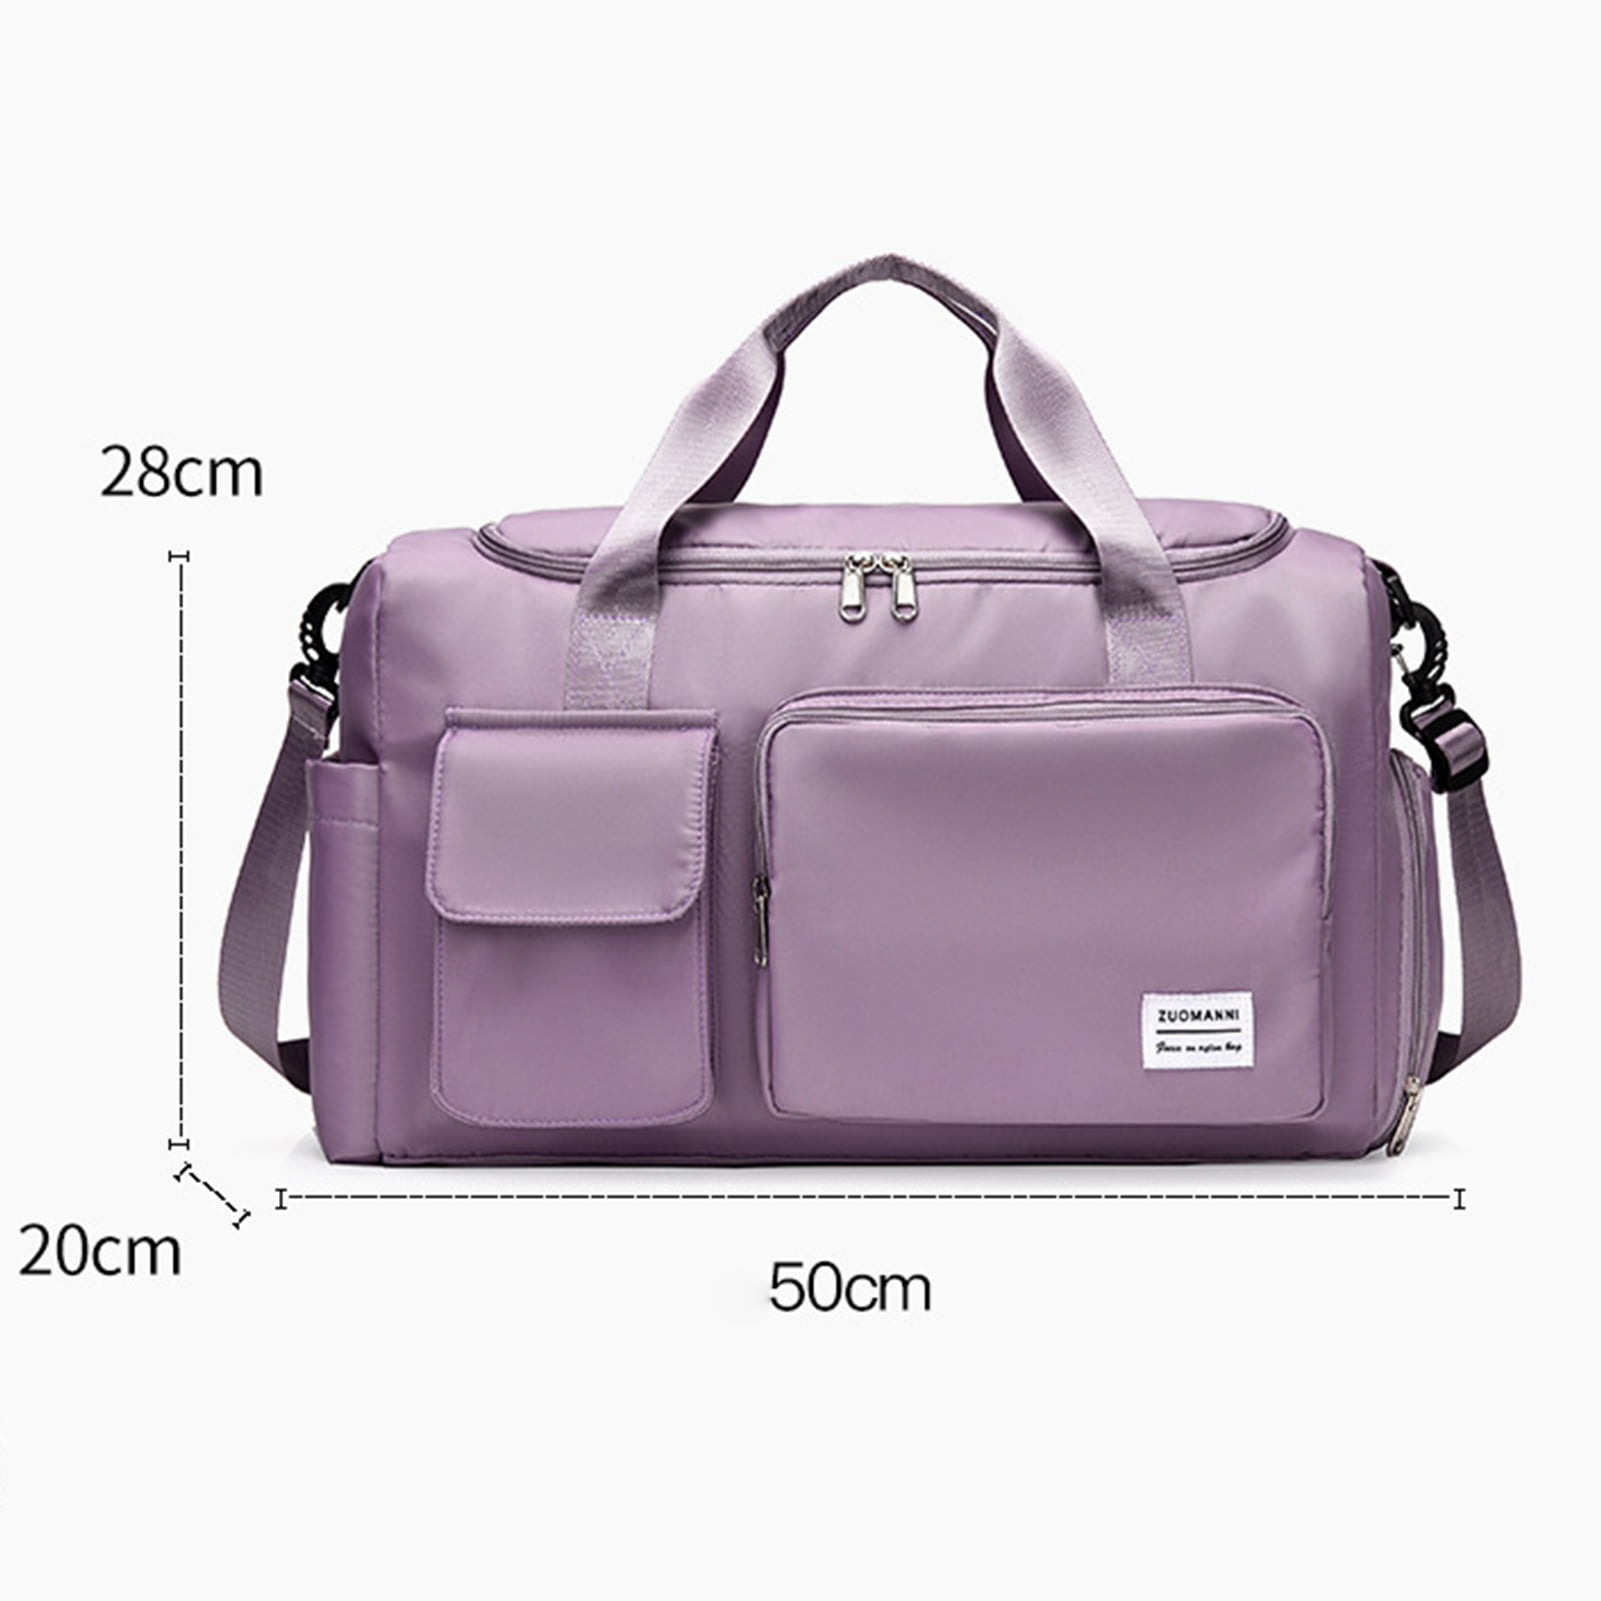 LouisWill Sports Gym Bags Training Fitness Travel Handbag Duffle